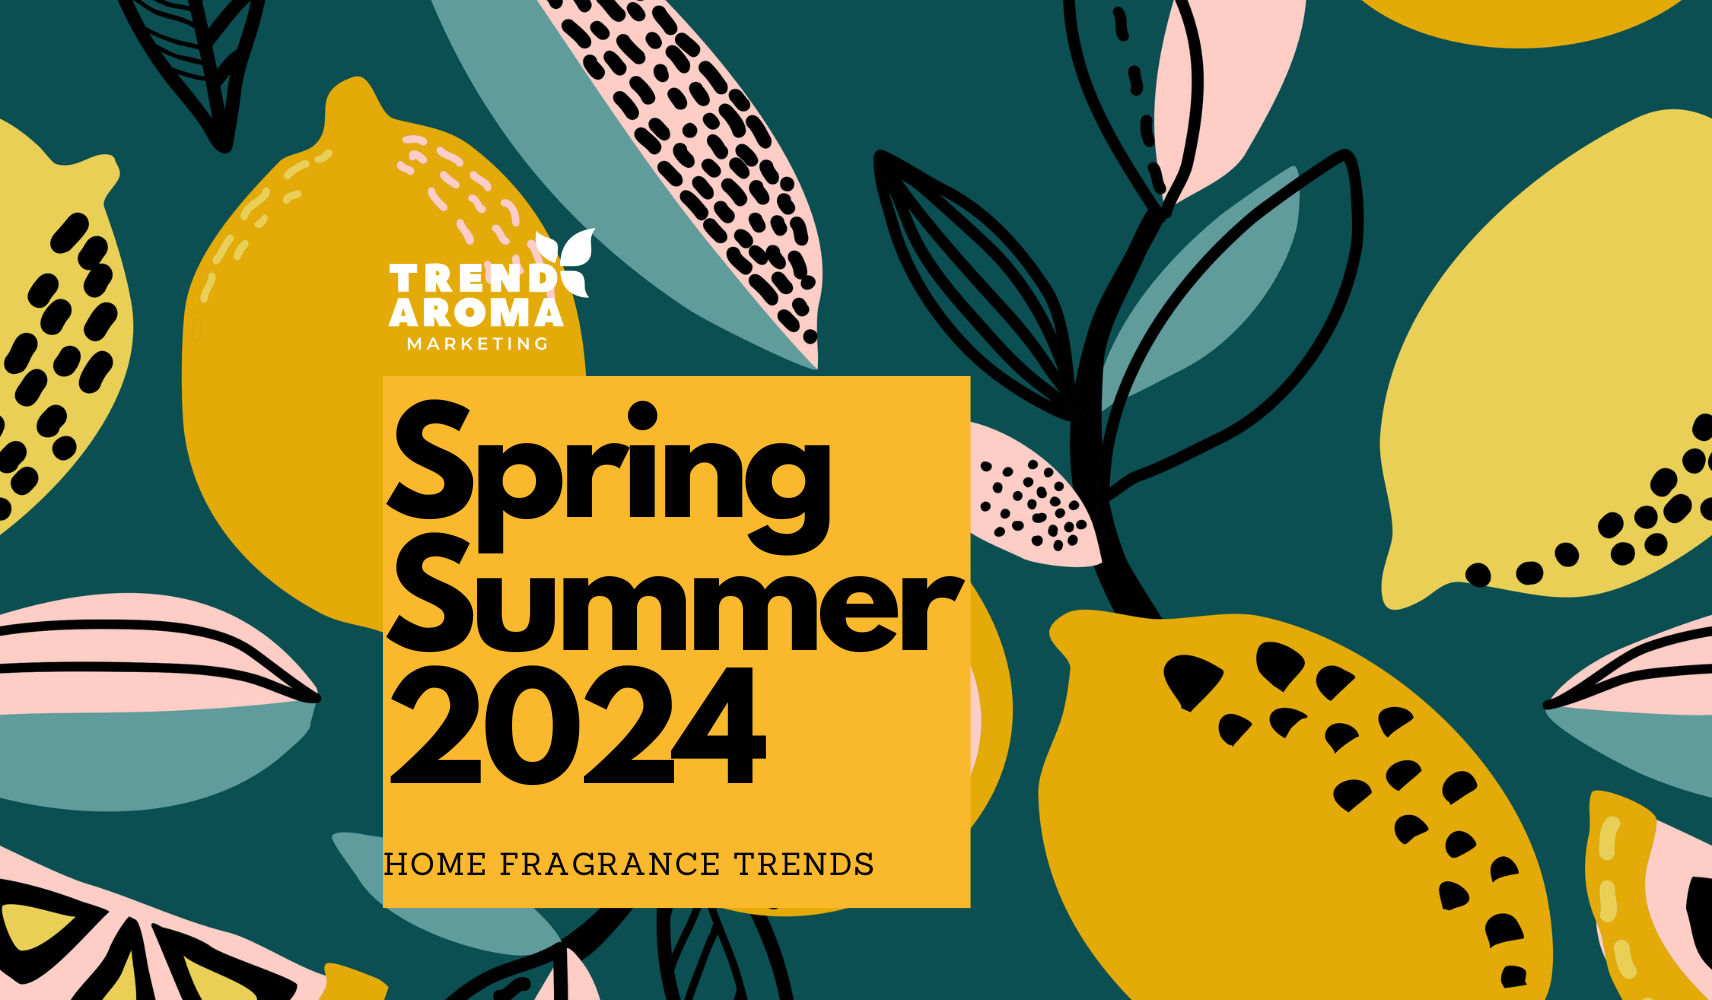 Spring Summer 2024 Home Fragrance Trends Forecast • TrendAroma Marketing